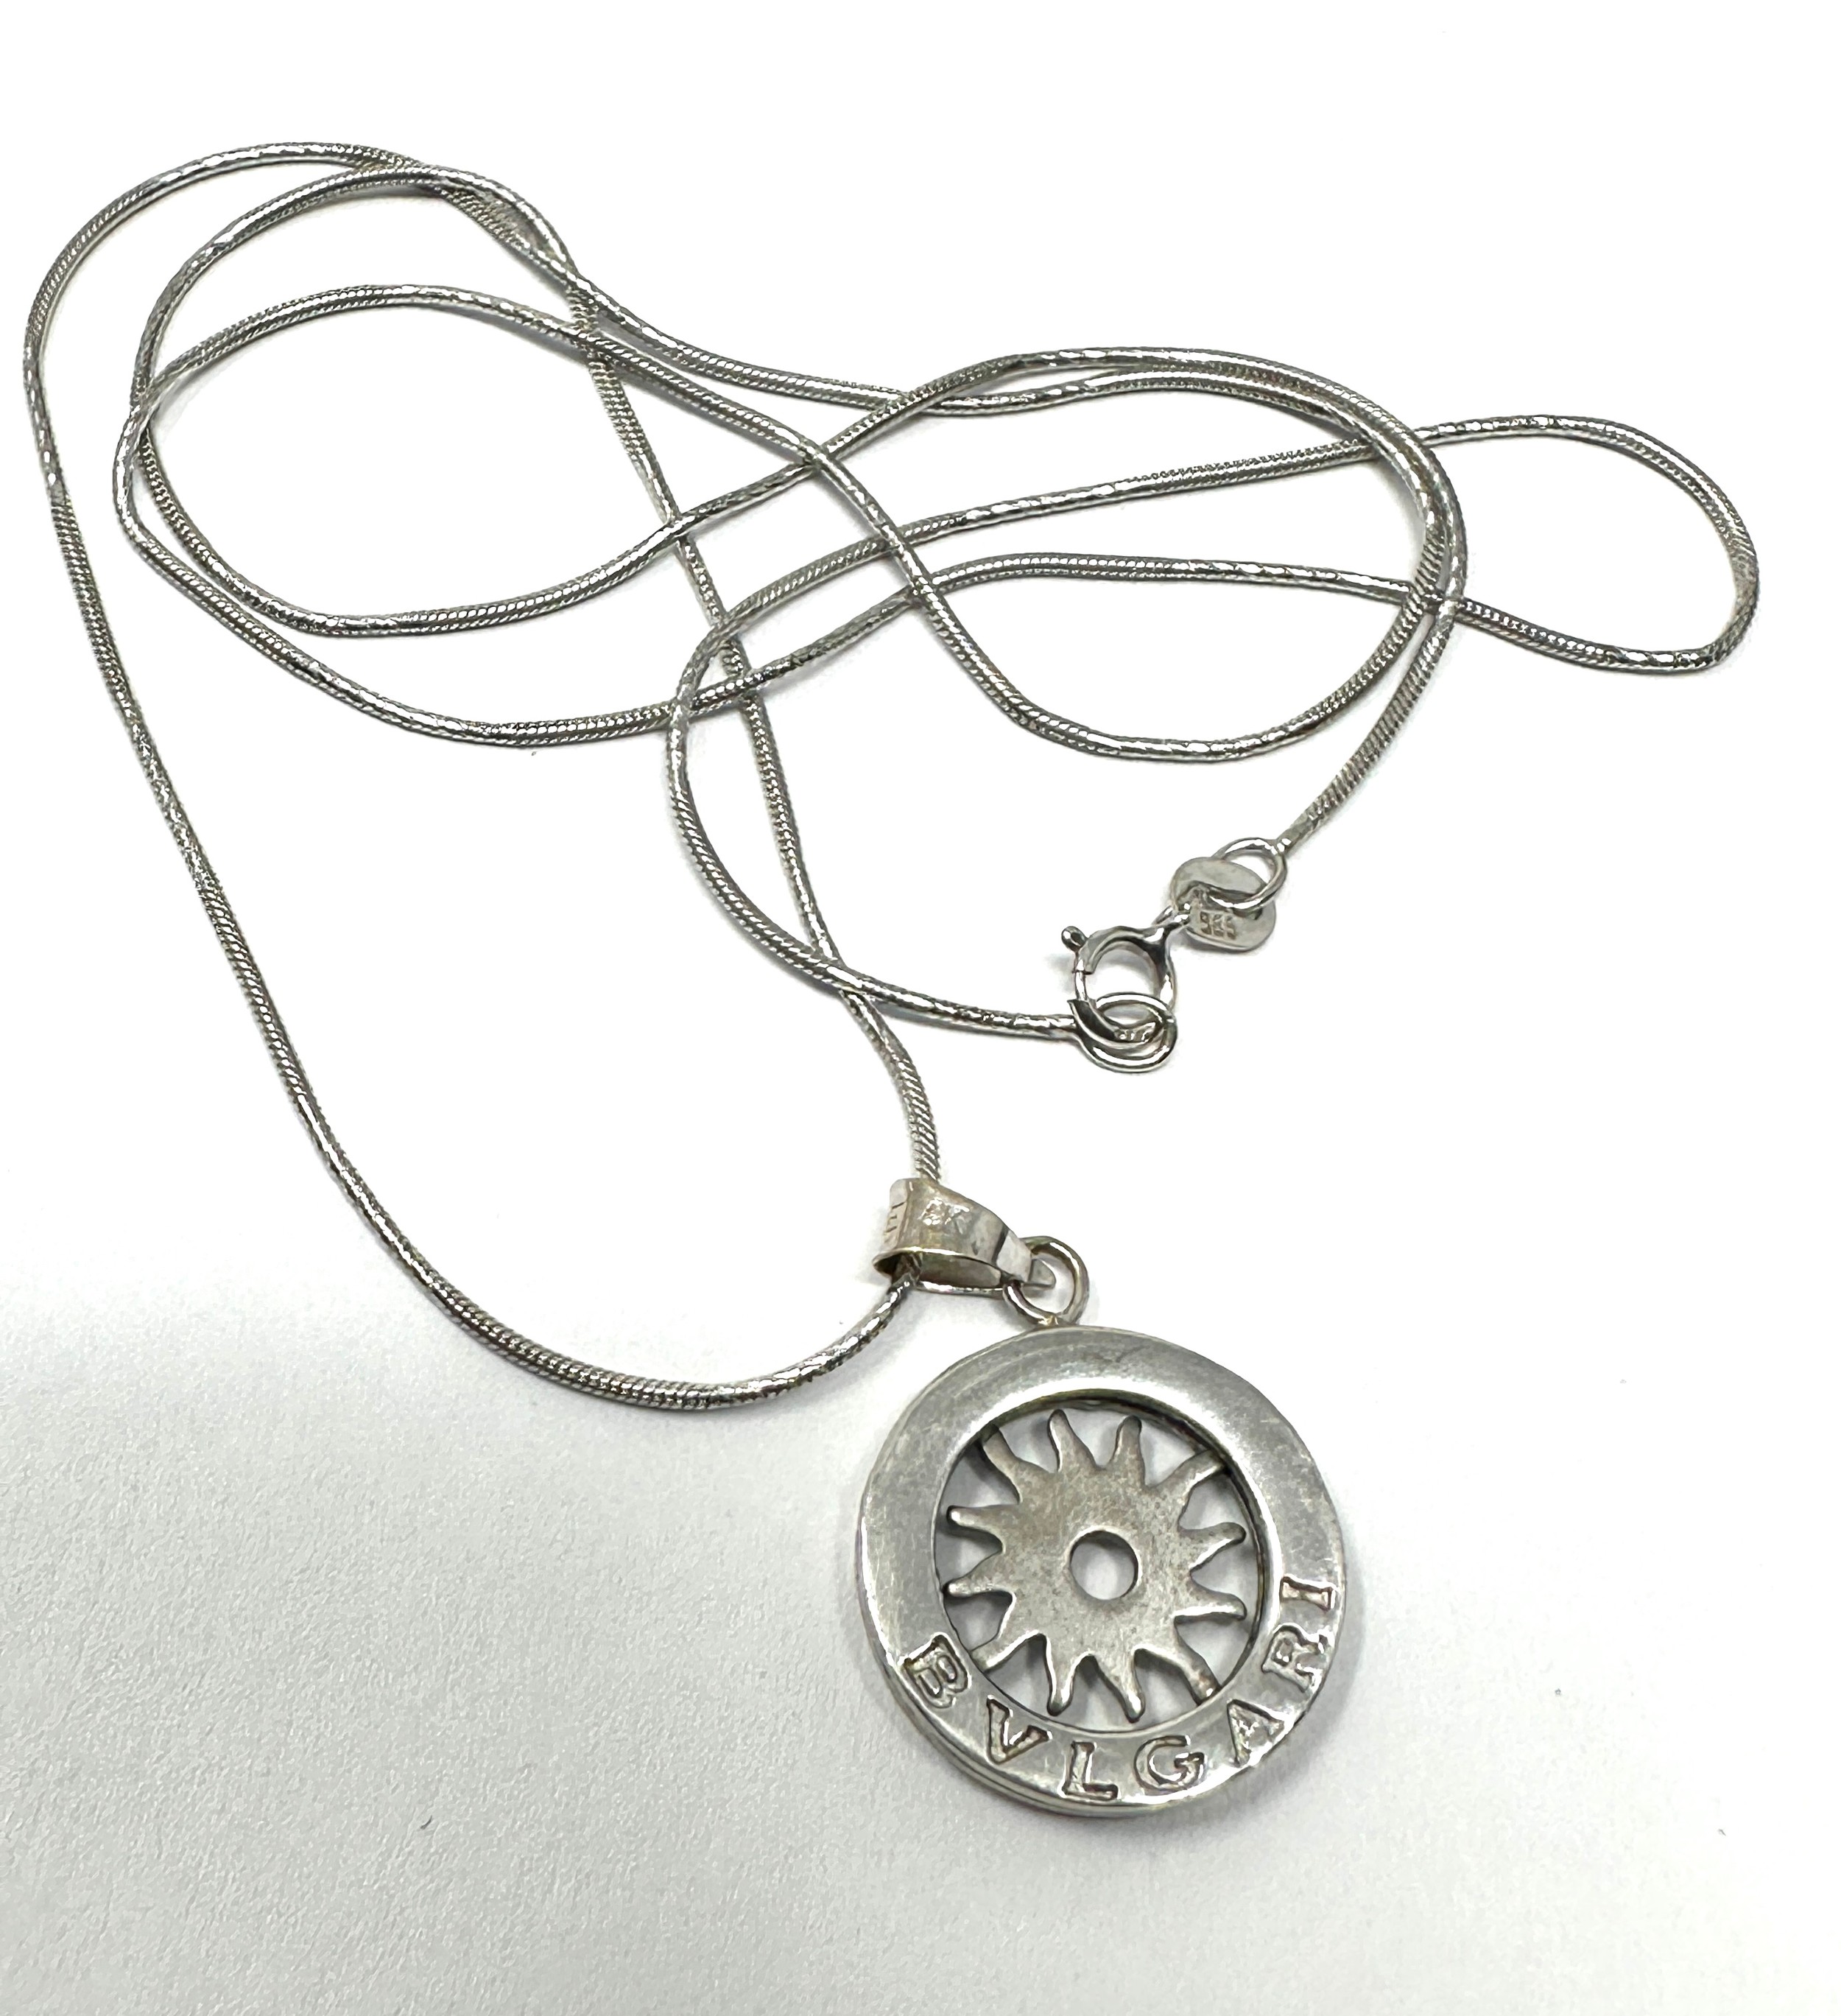 14ct white gold bvlgari spinning sunburst pendant necklace (5g)